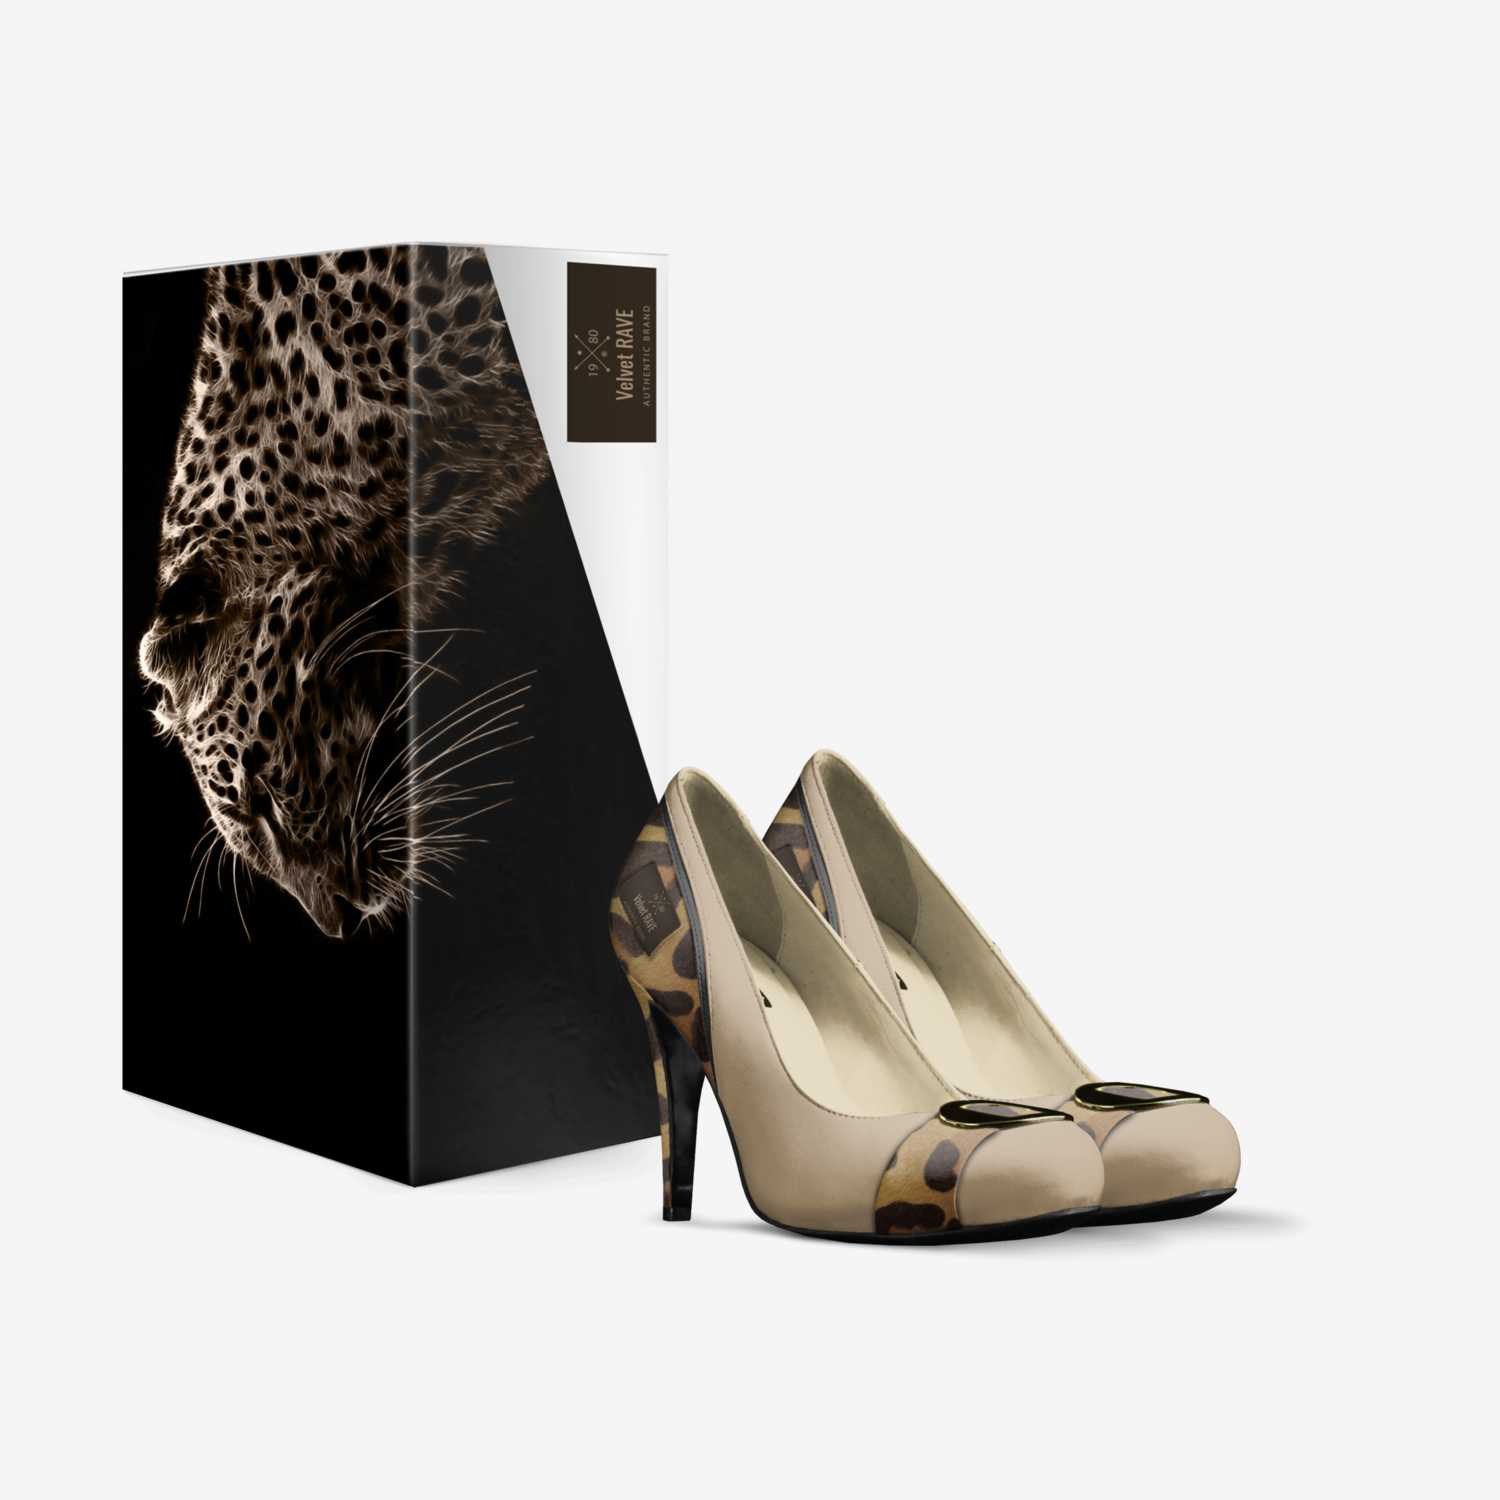 Velvet RAVE custom made in Italy shoes by Shantae Esannason | Box view